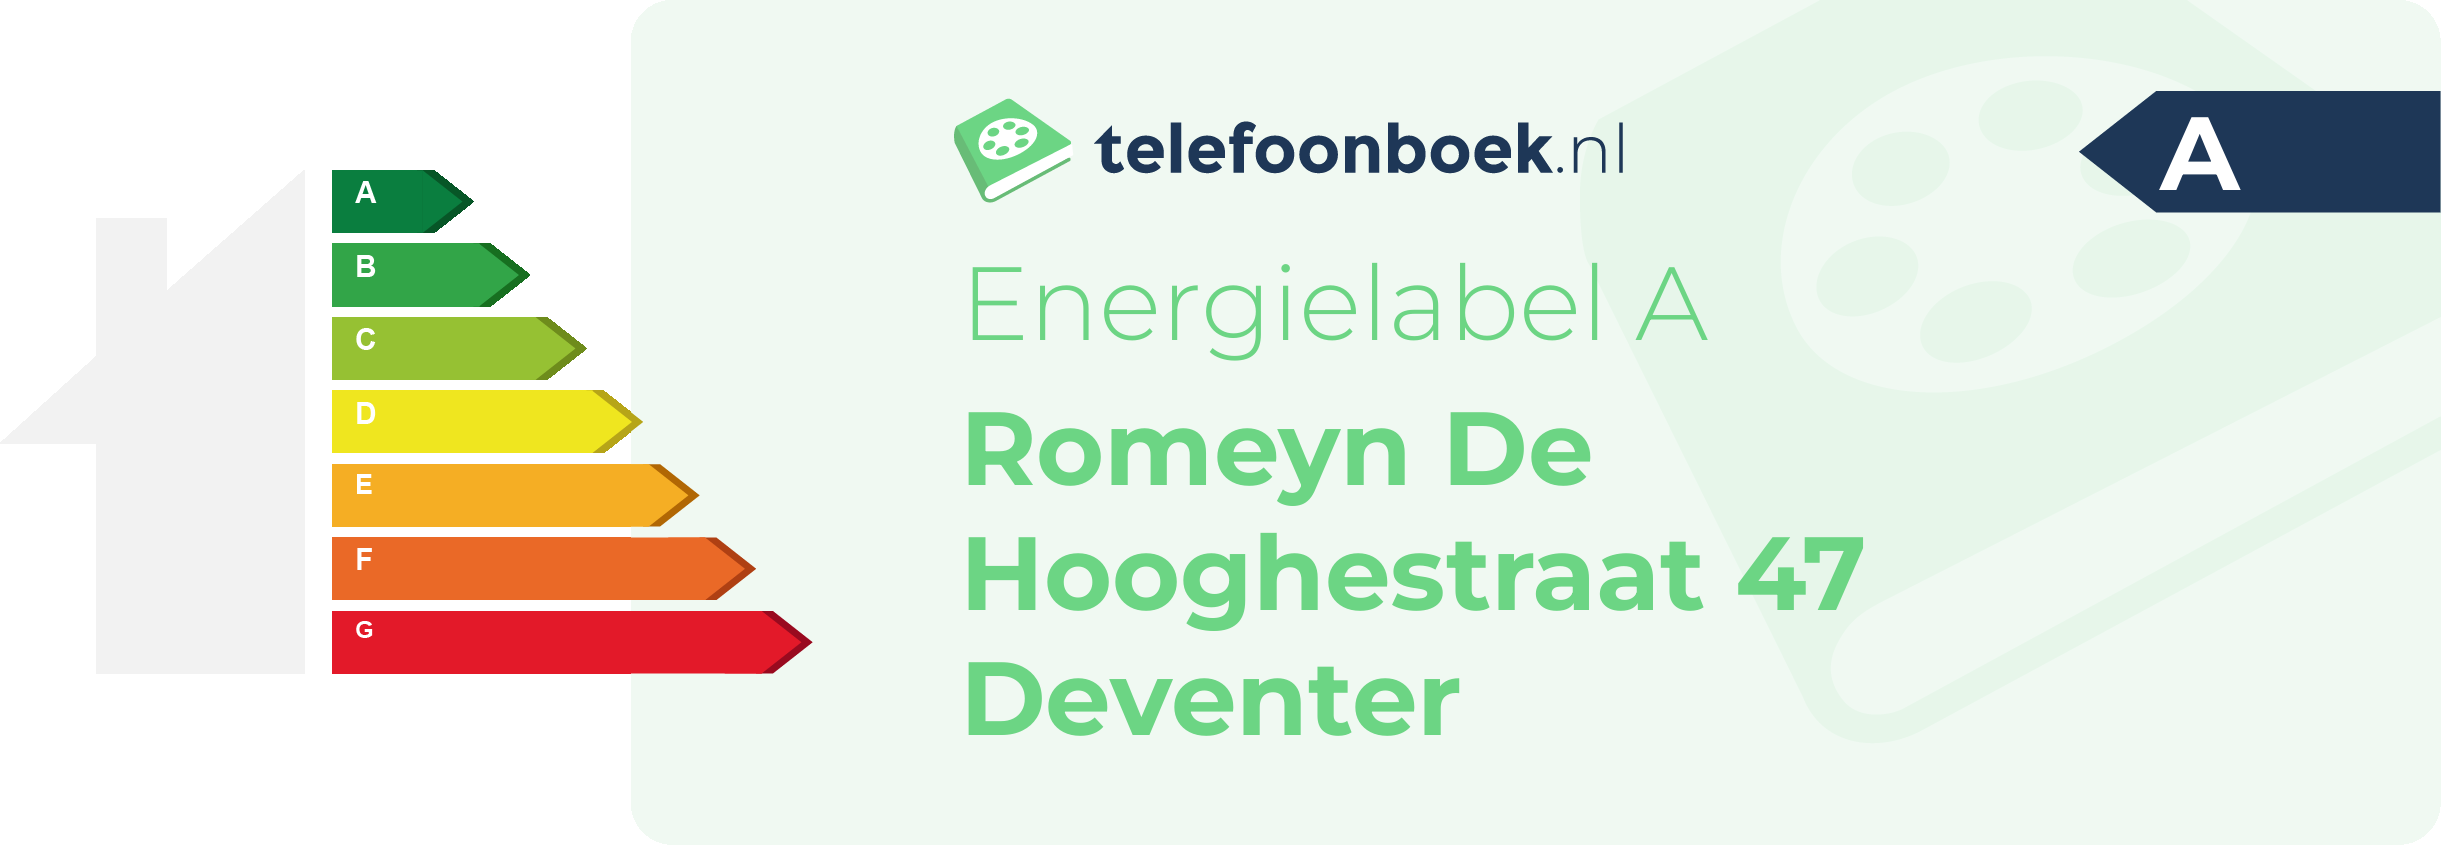 Energielabel Romeyn De Hooghestraat 47 Deventer